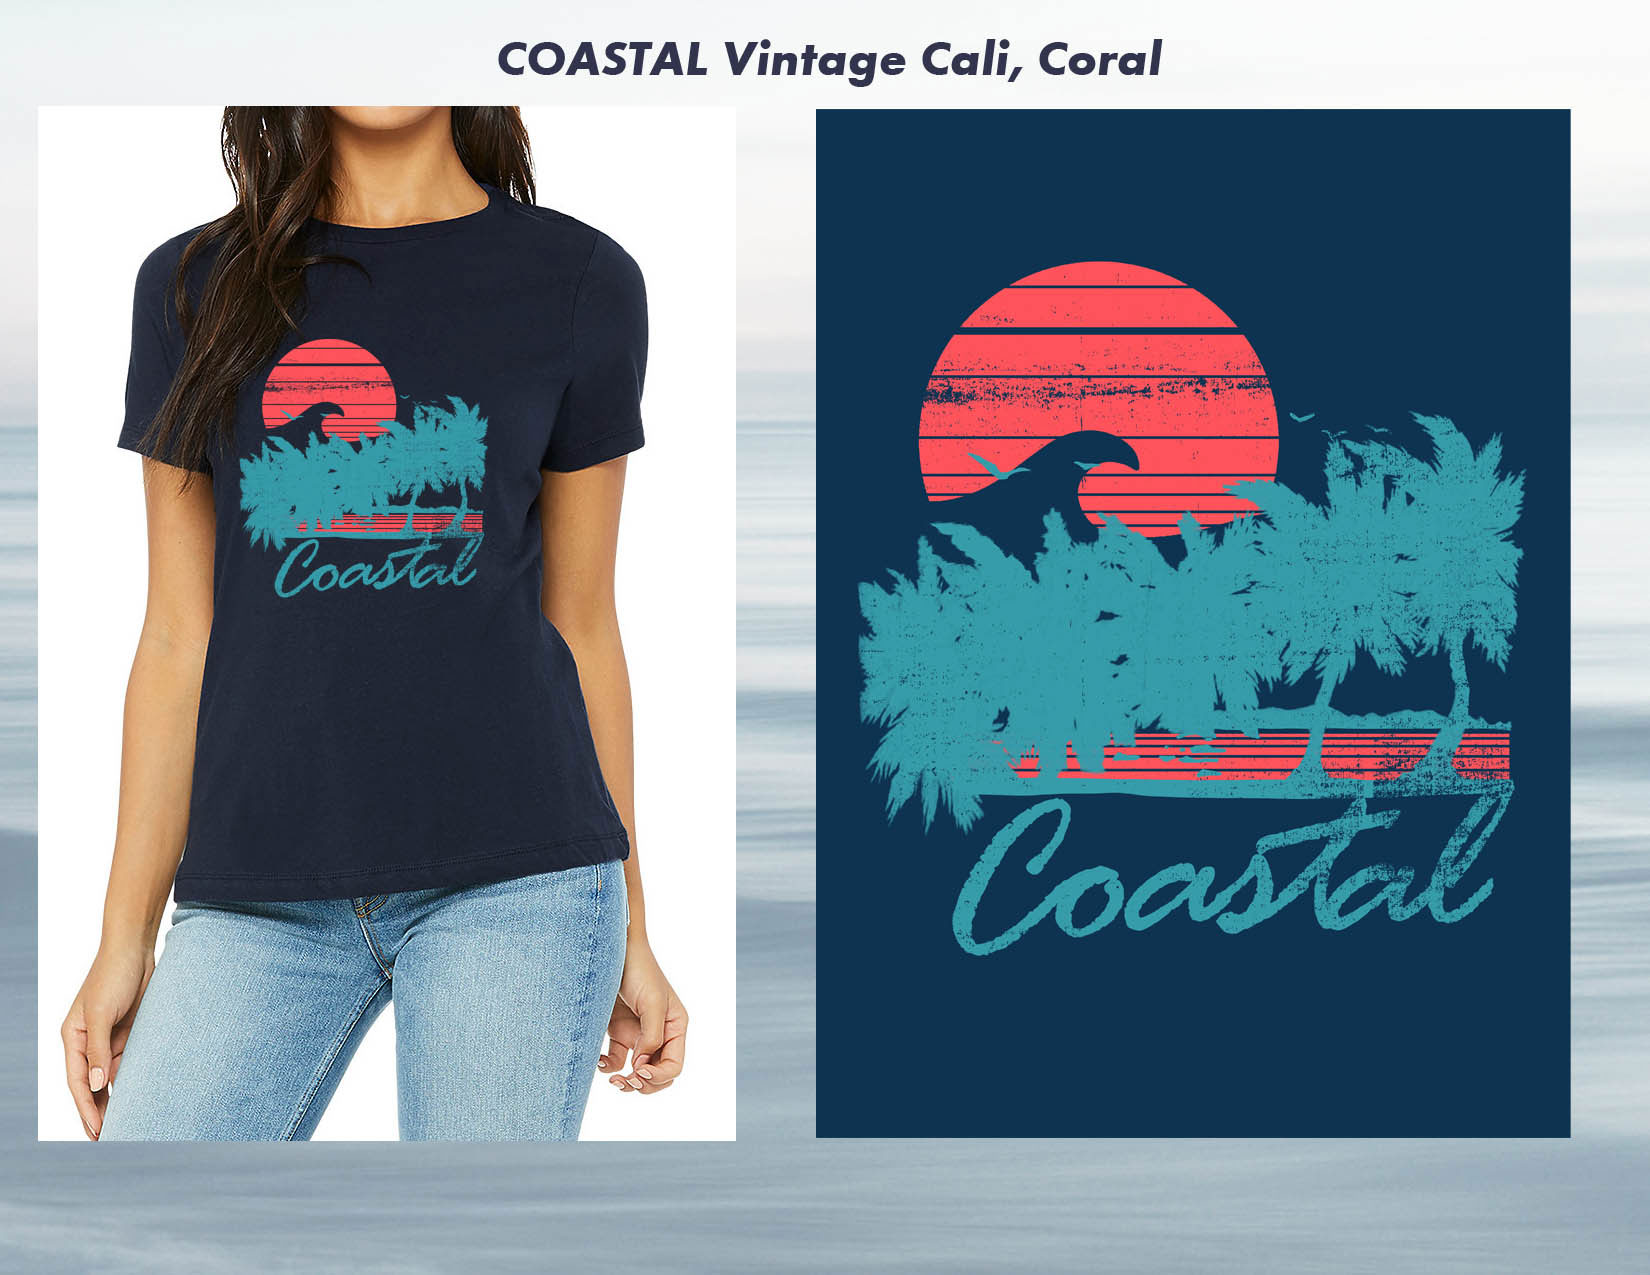 Coastal-vintage-cali-coral-mock